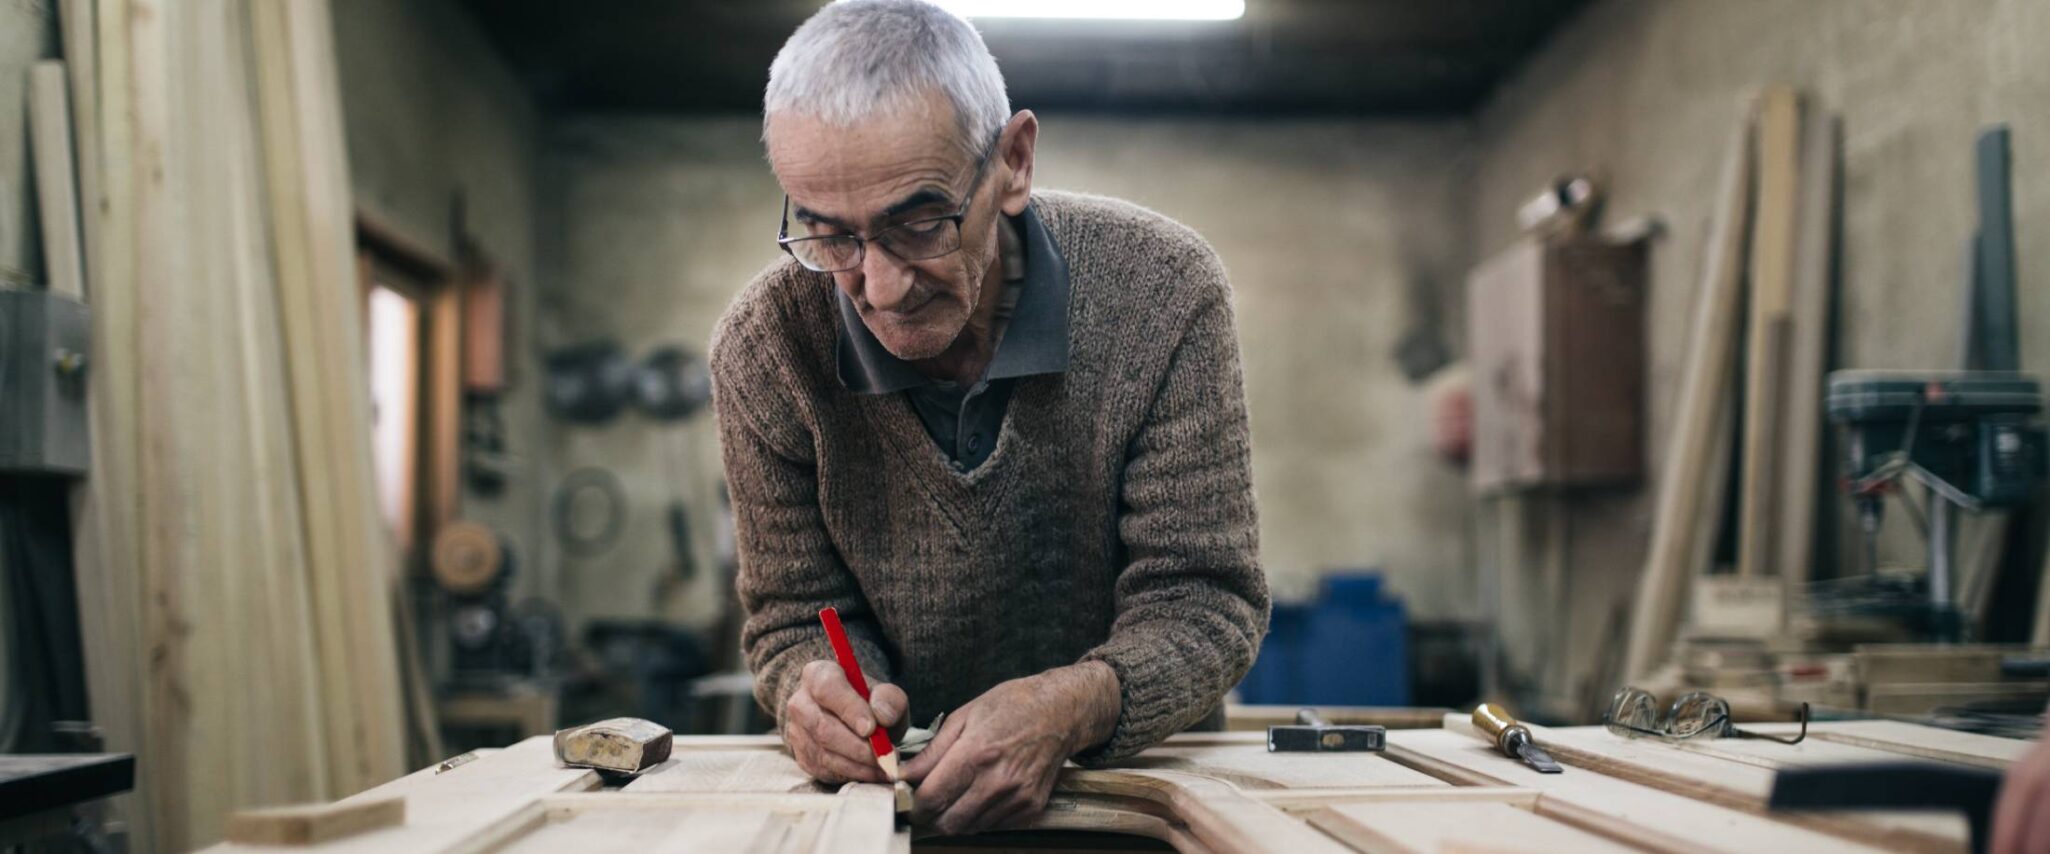 senior man woodworking